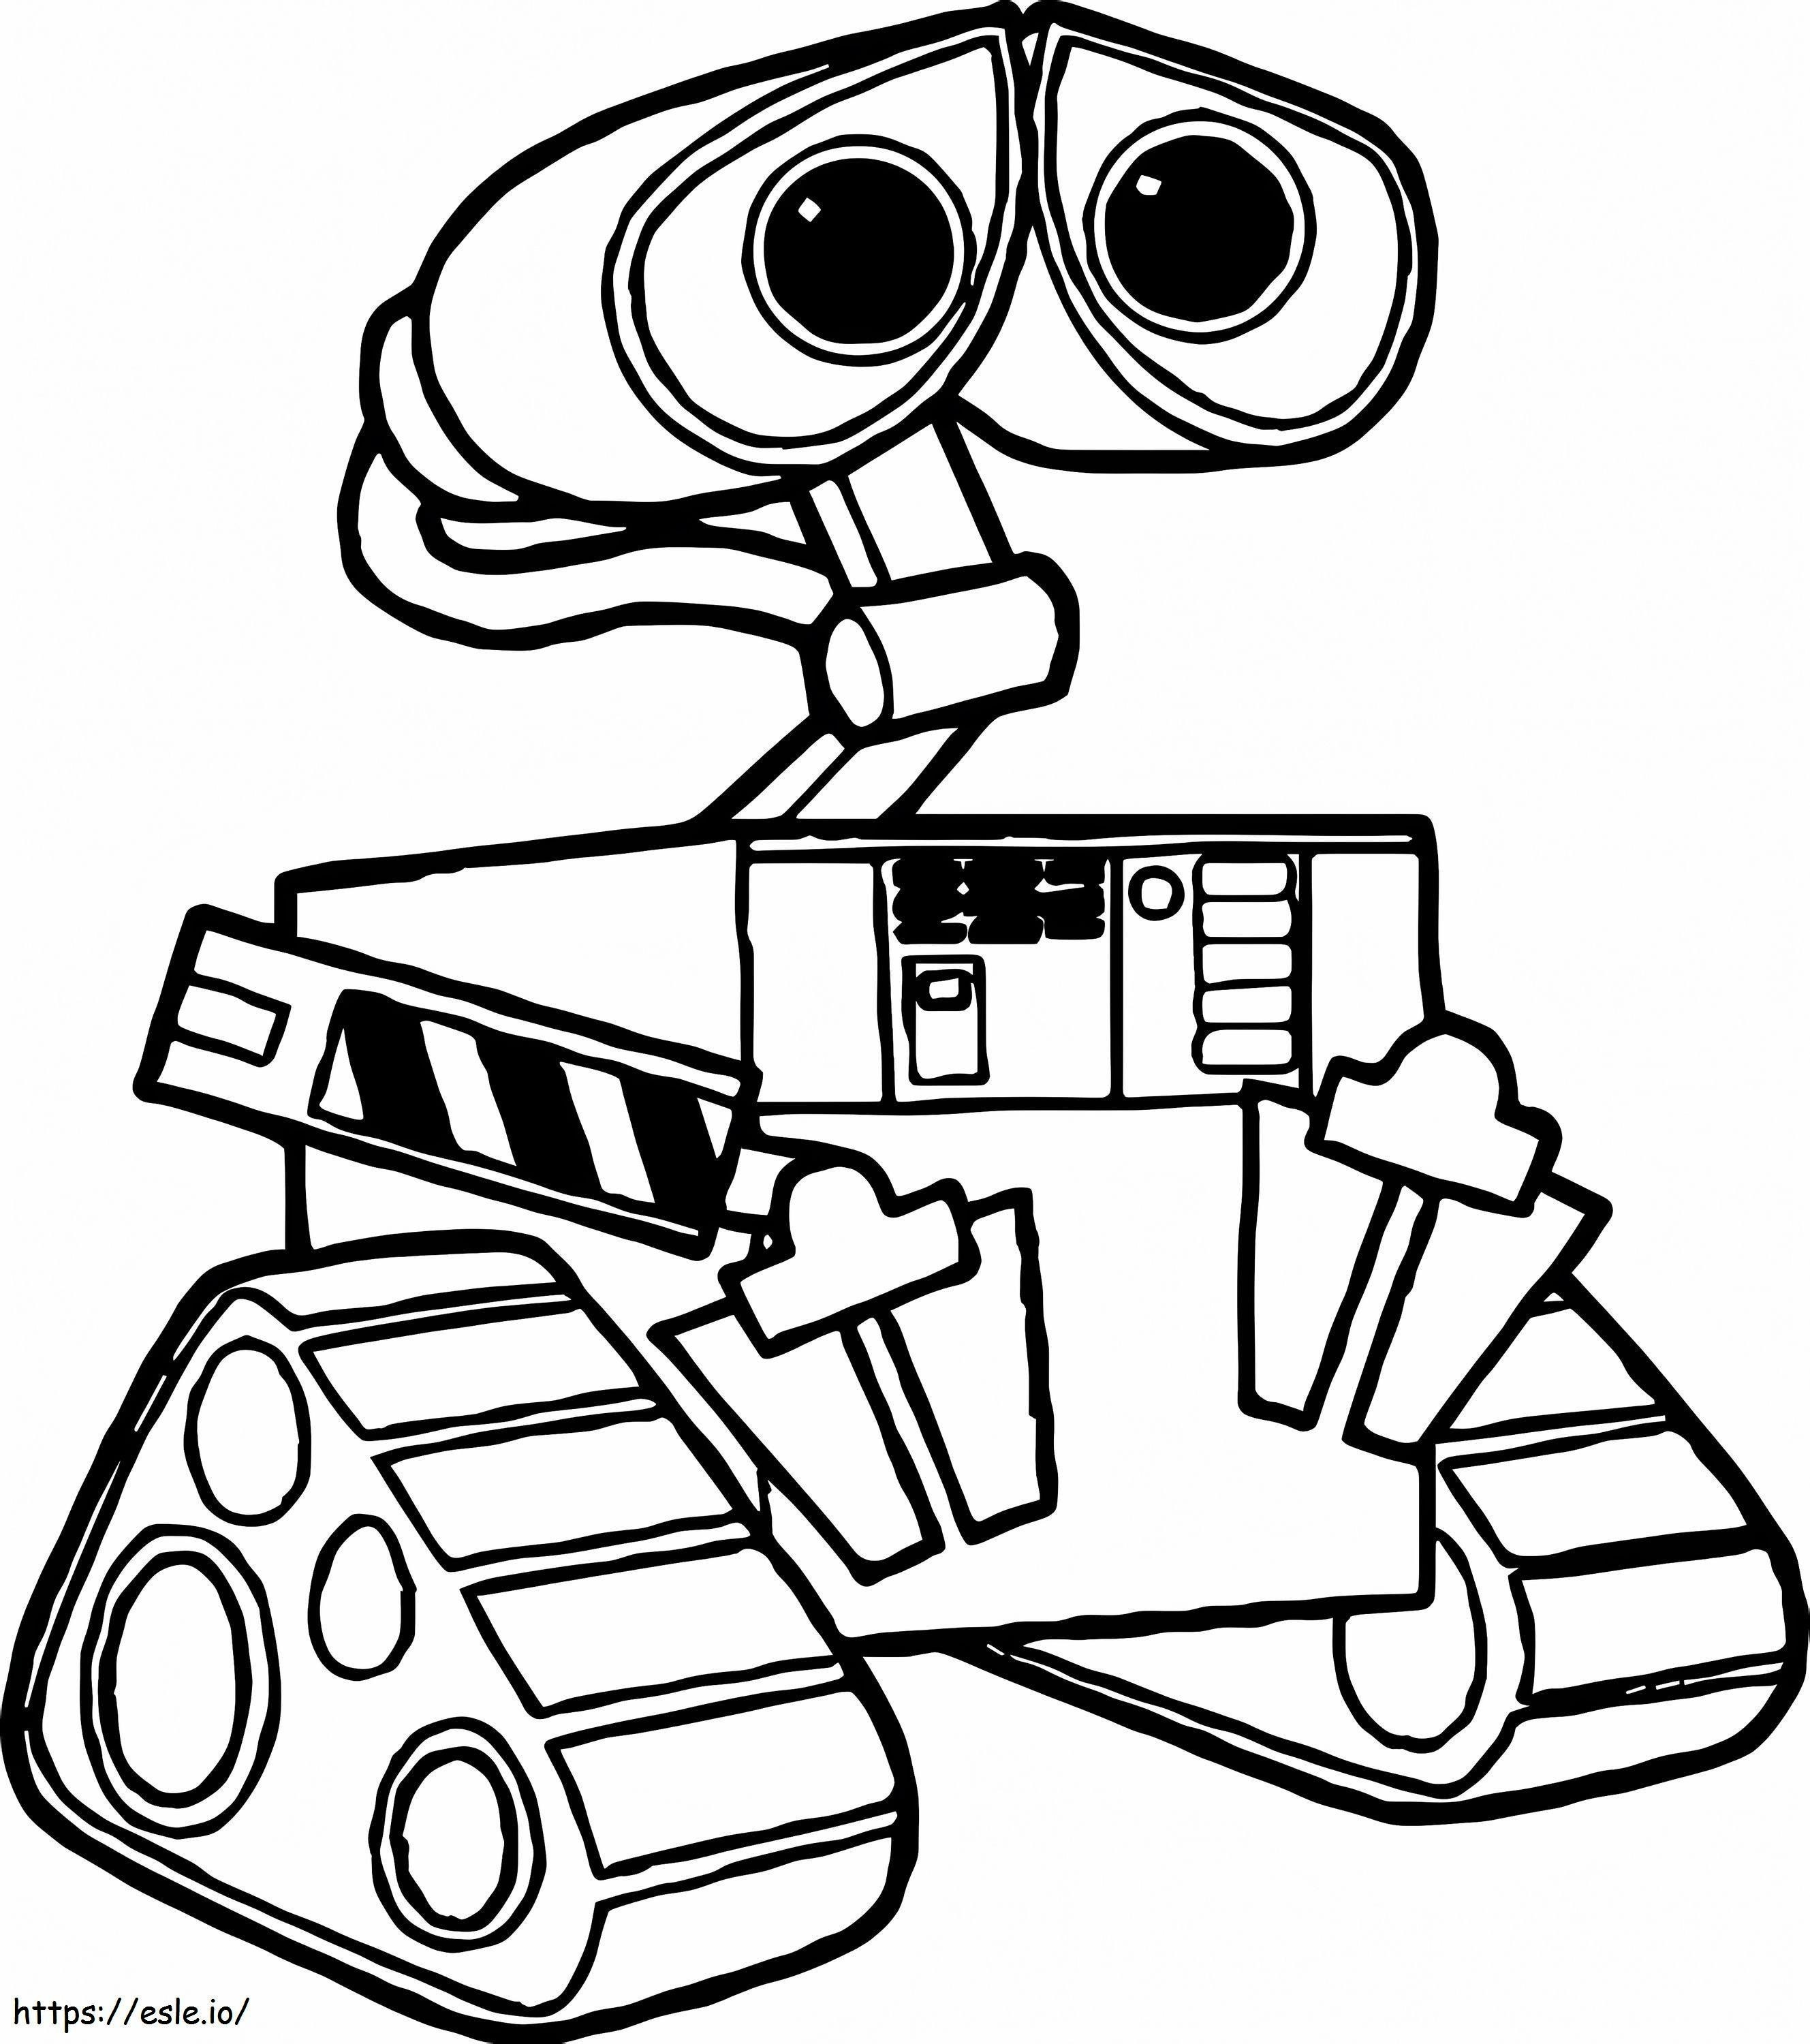 Monitoring Robot coloring page